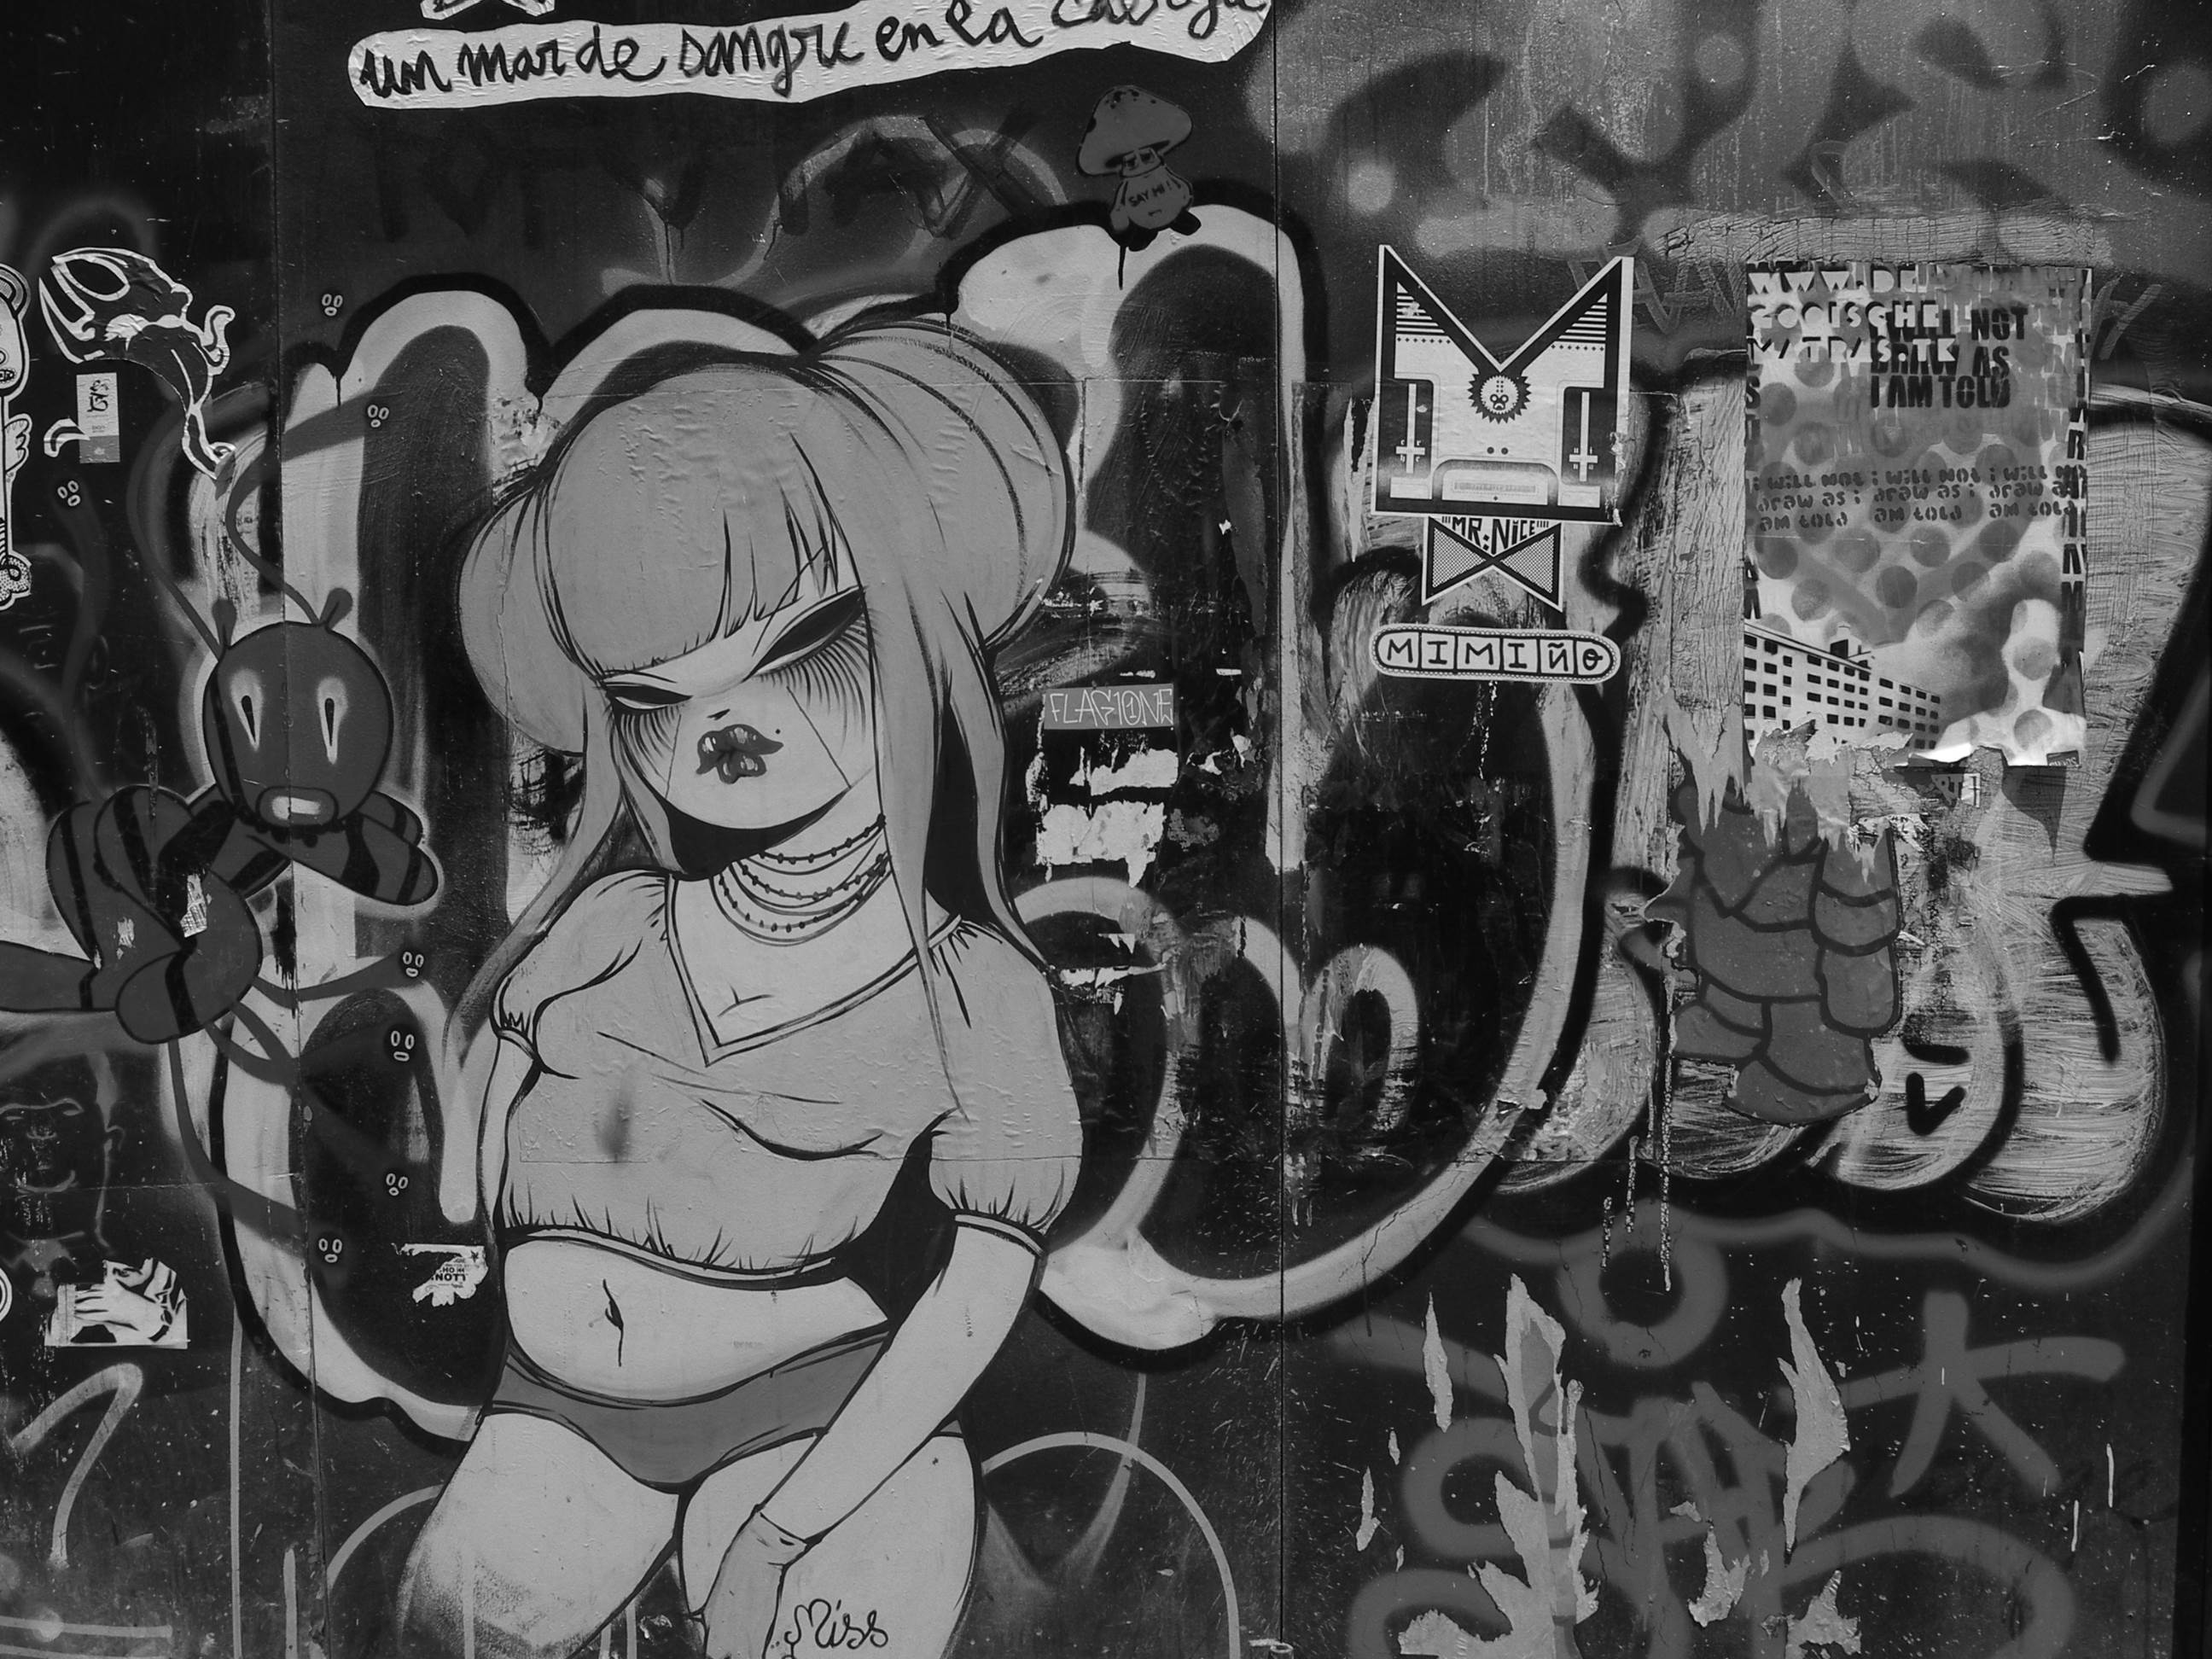 Detalle.
Grafiti - 2004